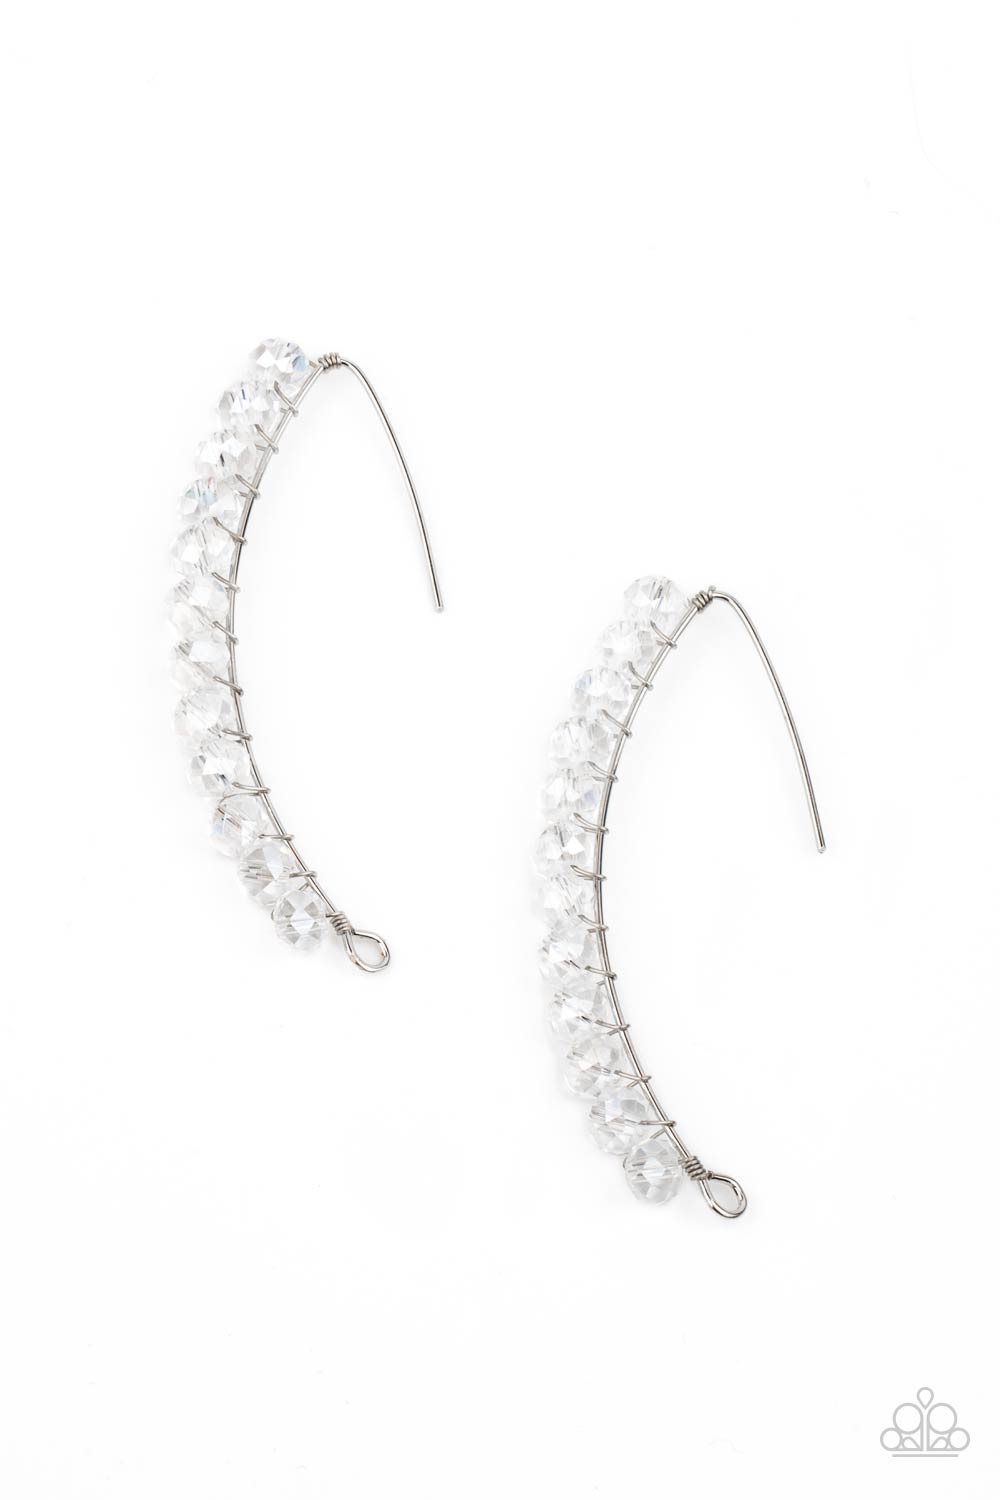 GLOW Hanging Fruit - White Earrings - Paparazzi Accessories